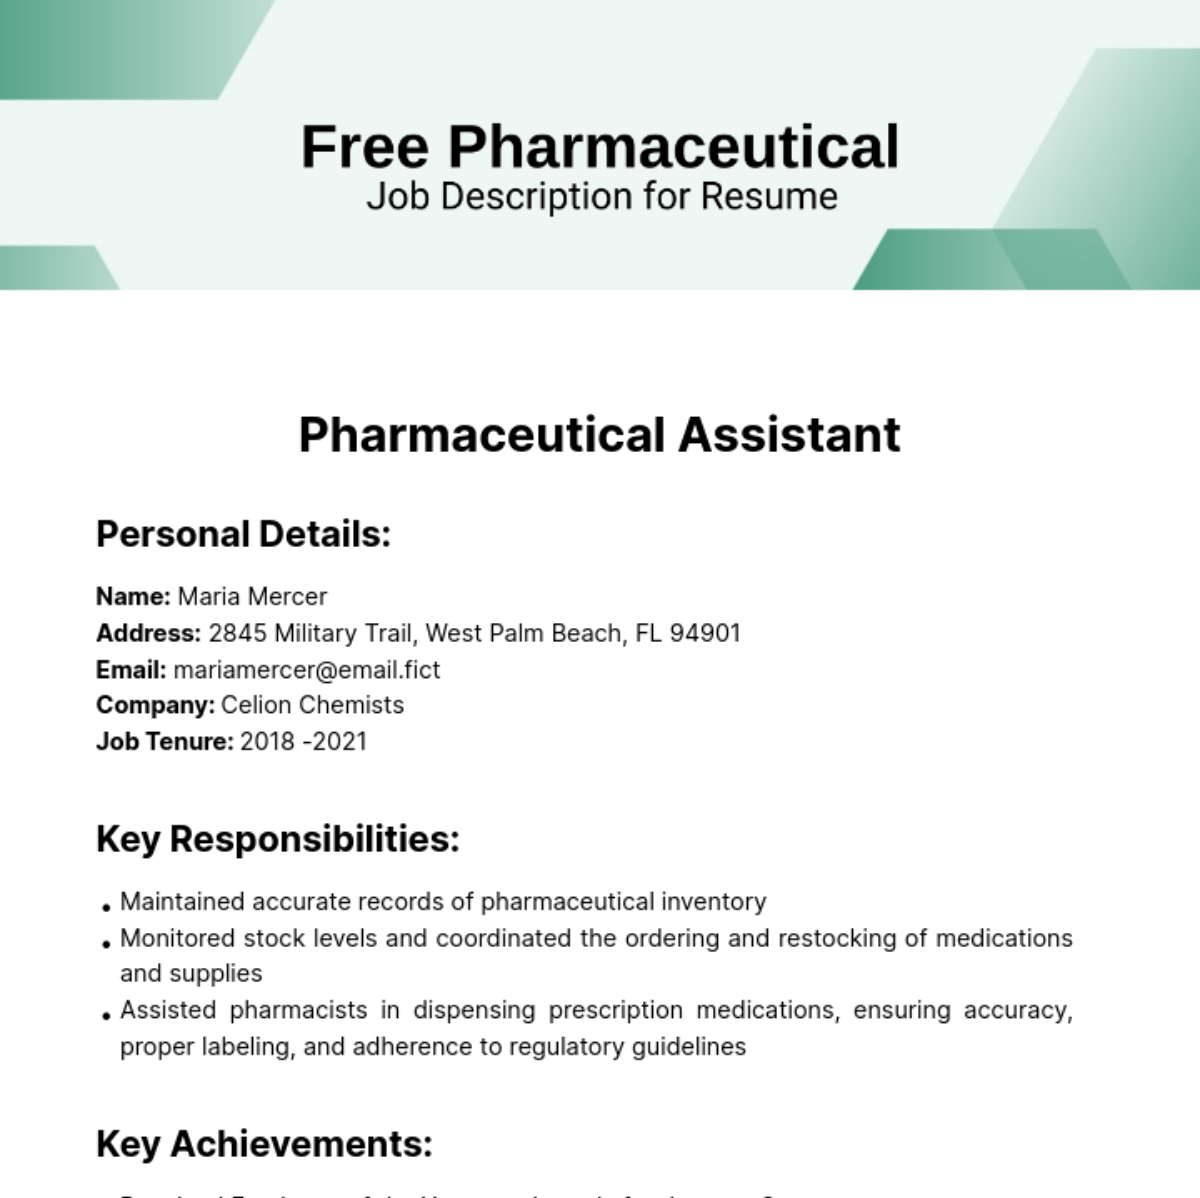 Free Pharmaceutical Job Description for Resume Template